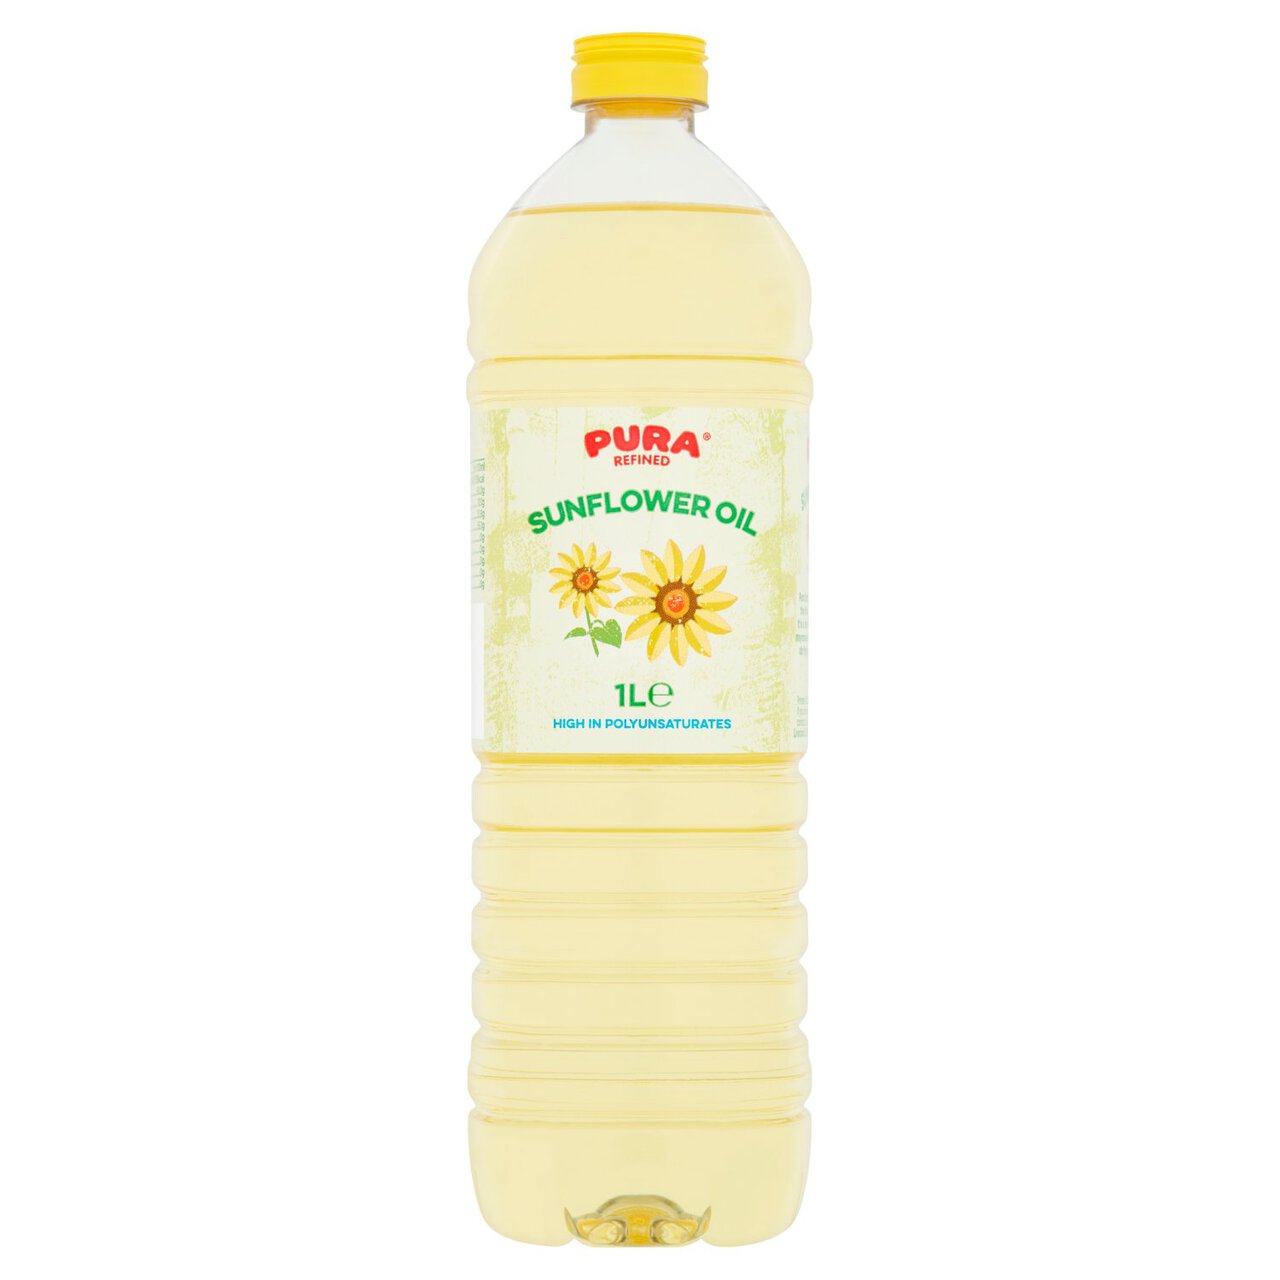 Pura Sunflower Oil 1l